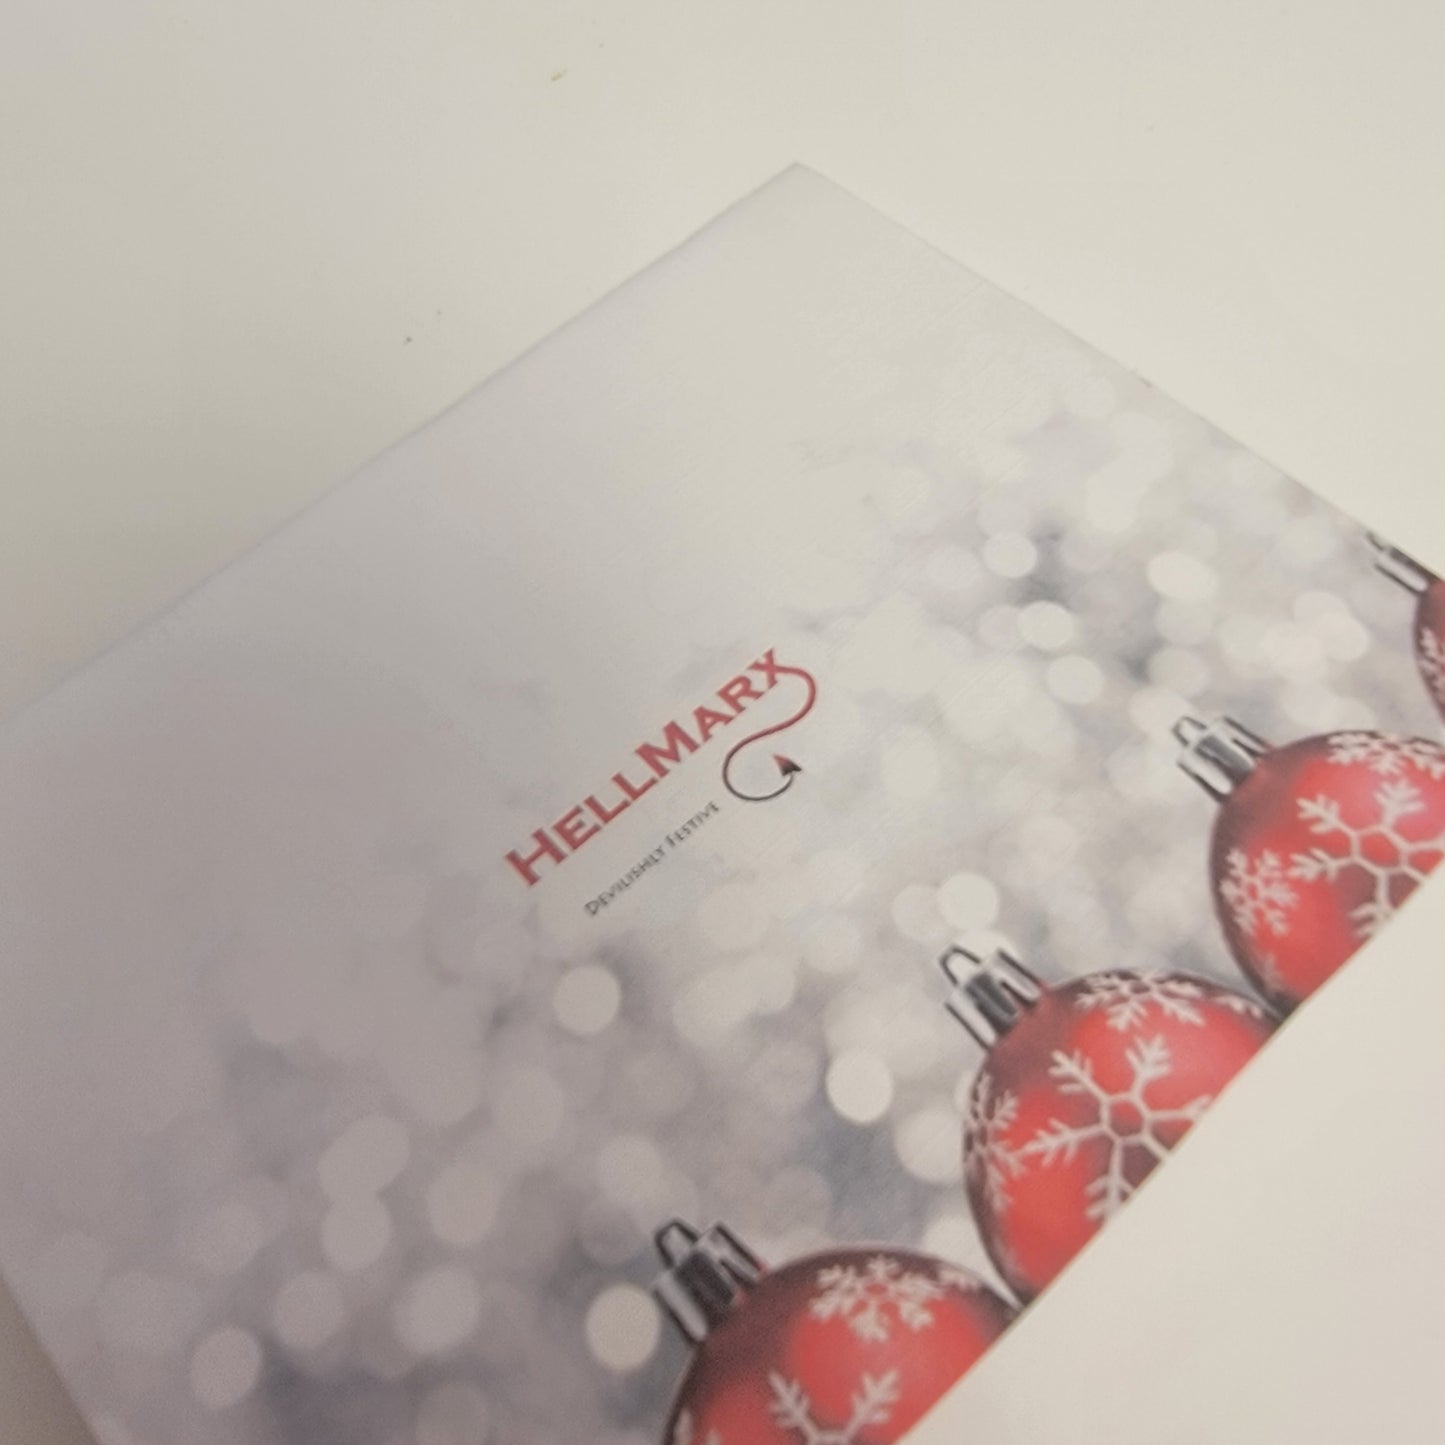 Hellmarx Chritmas Greeting Card "nice balls"